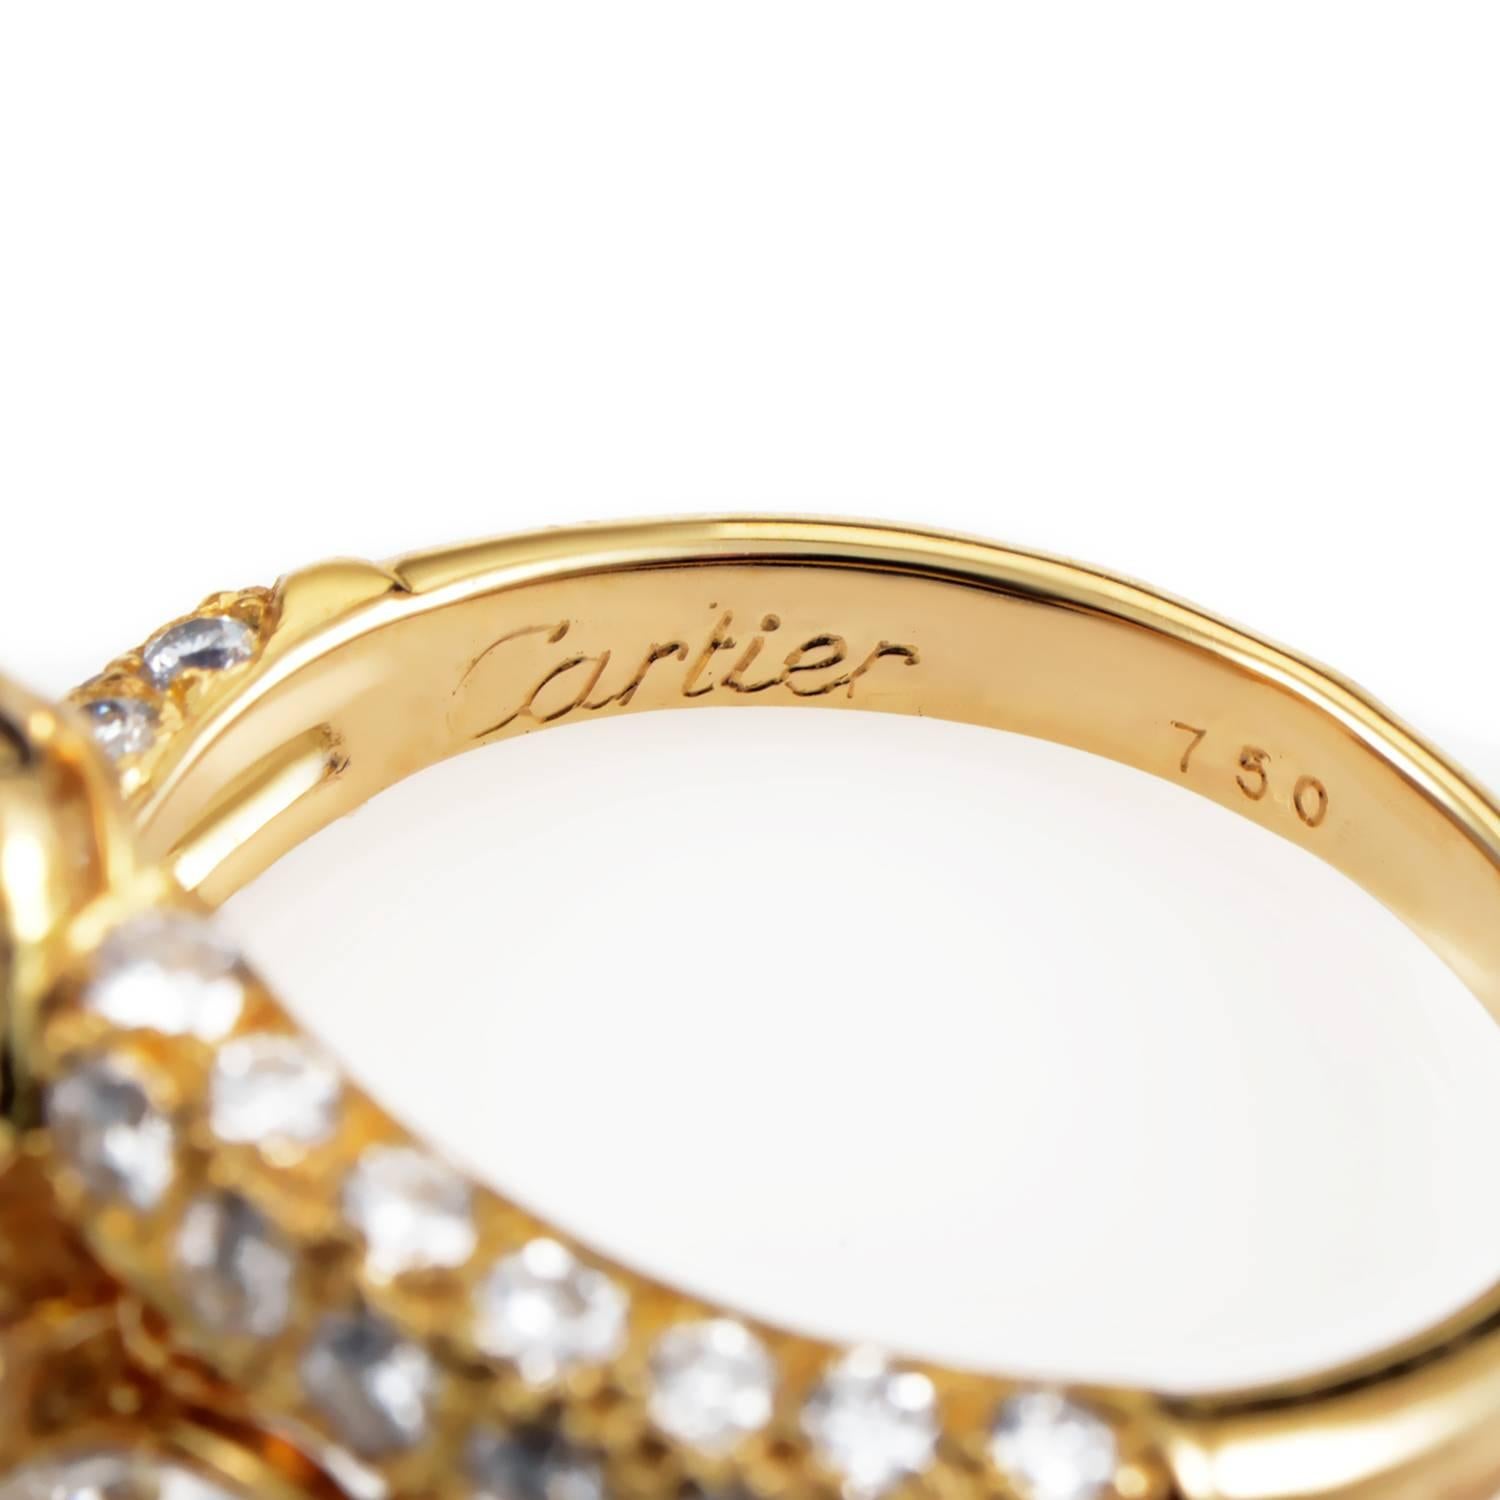 Women's Cartier Diamond Gold Ring 